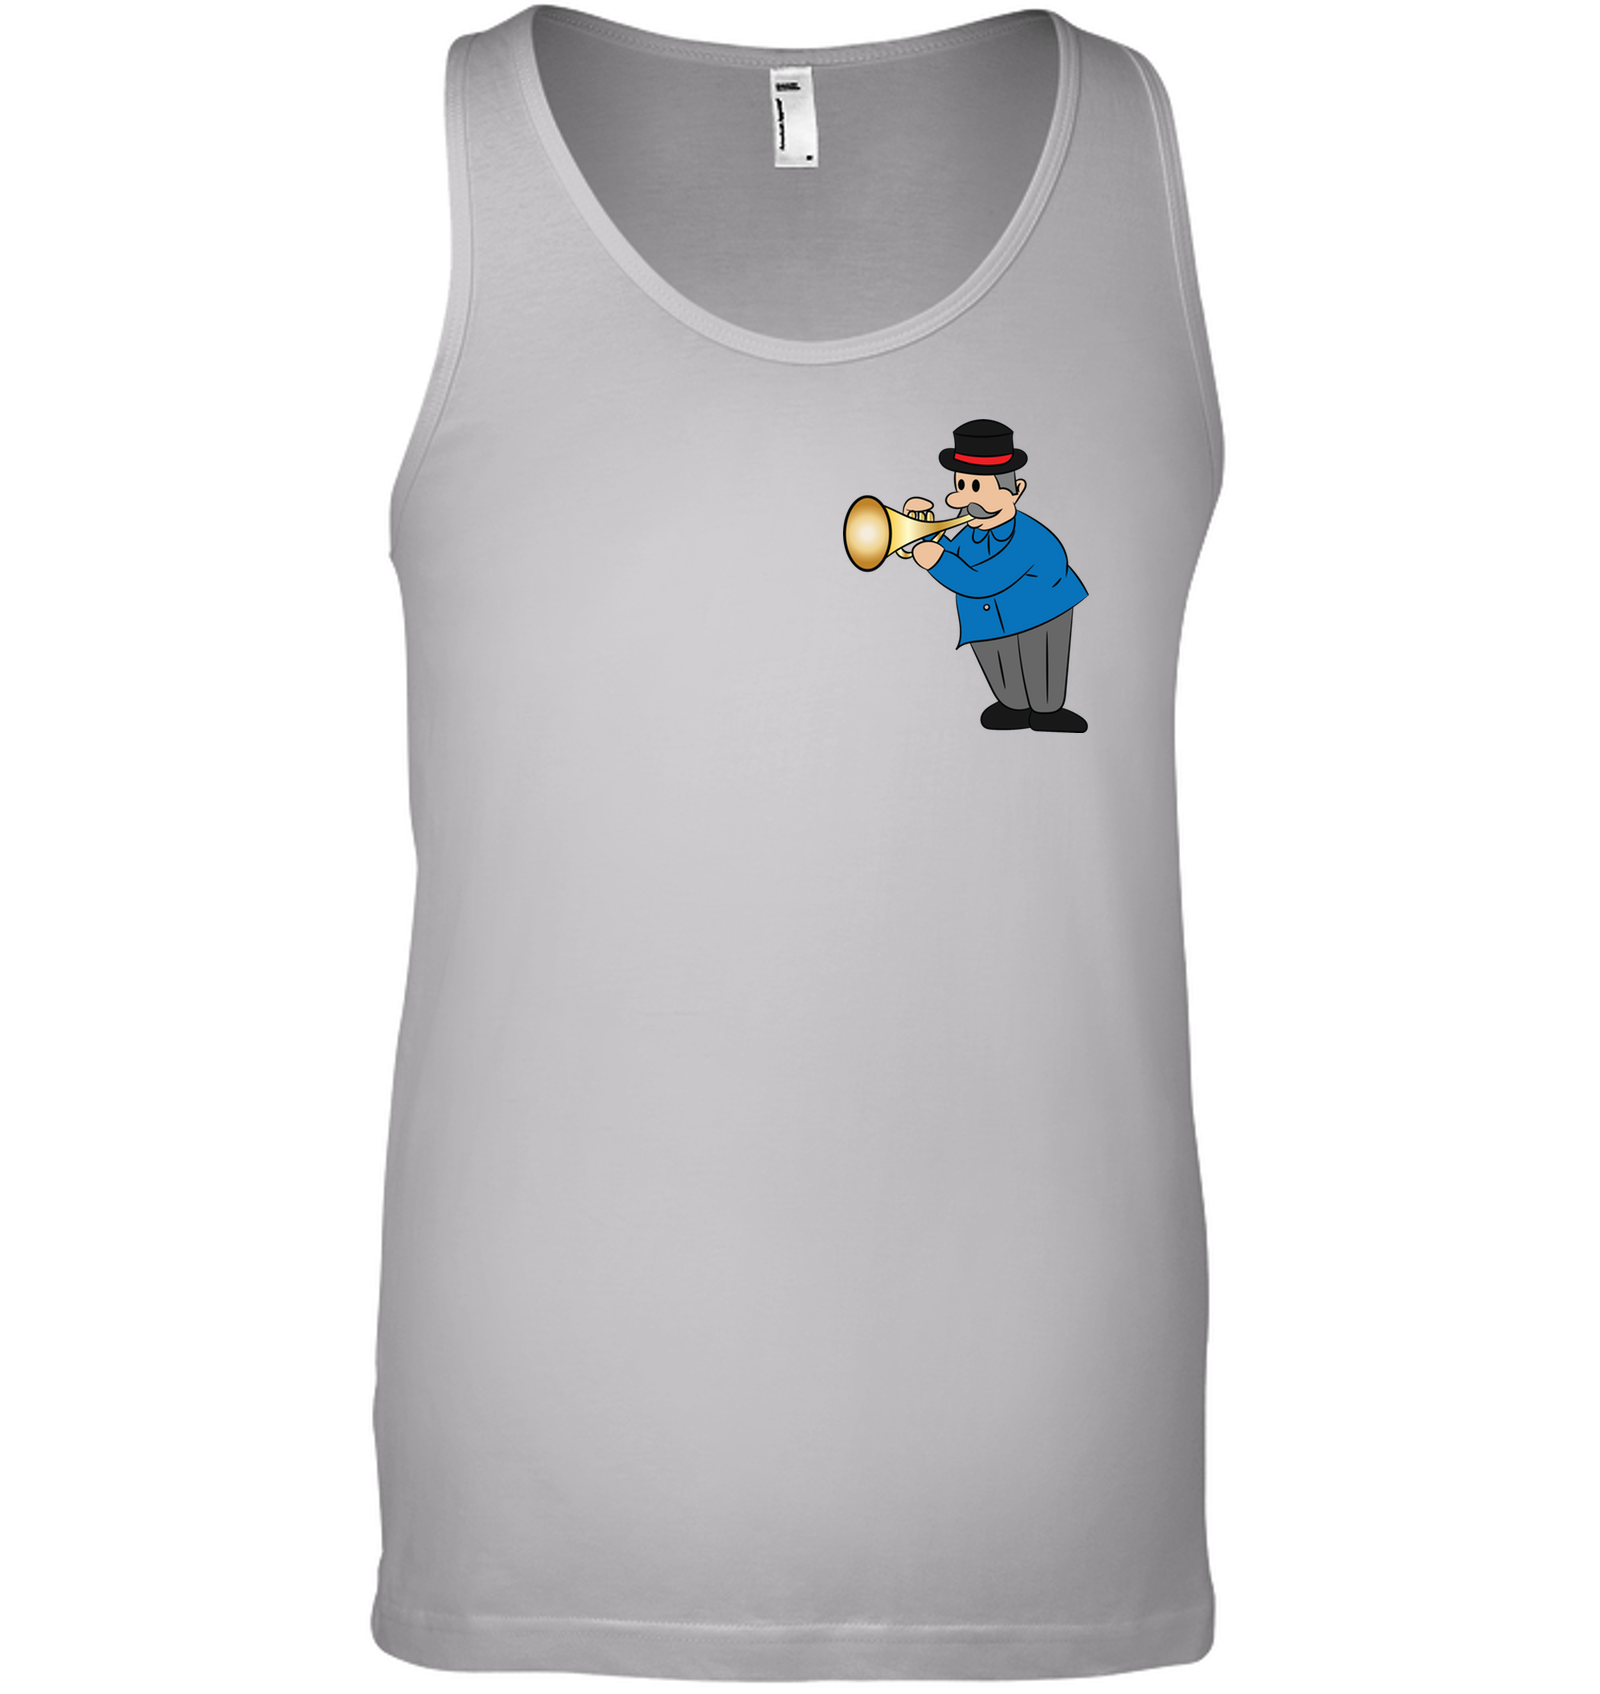 Man with Trumpet (Pocket Size) - Bella + Canvas Unisex Jersey Tank